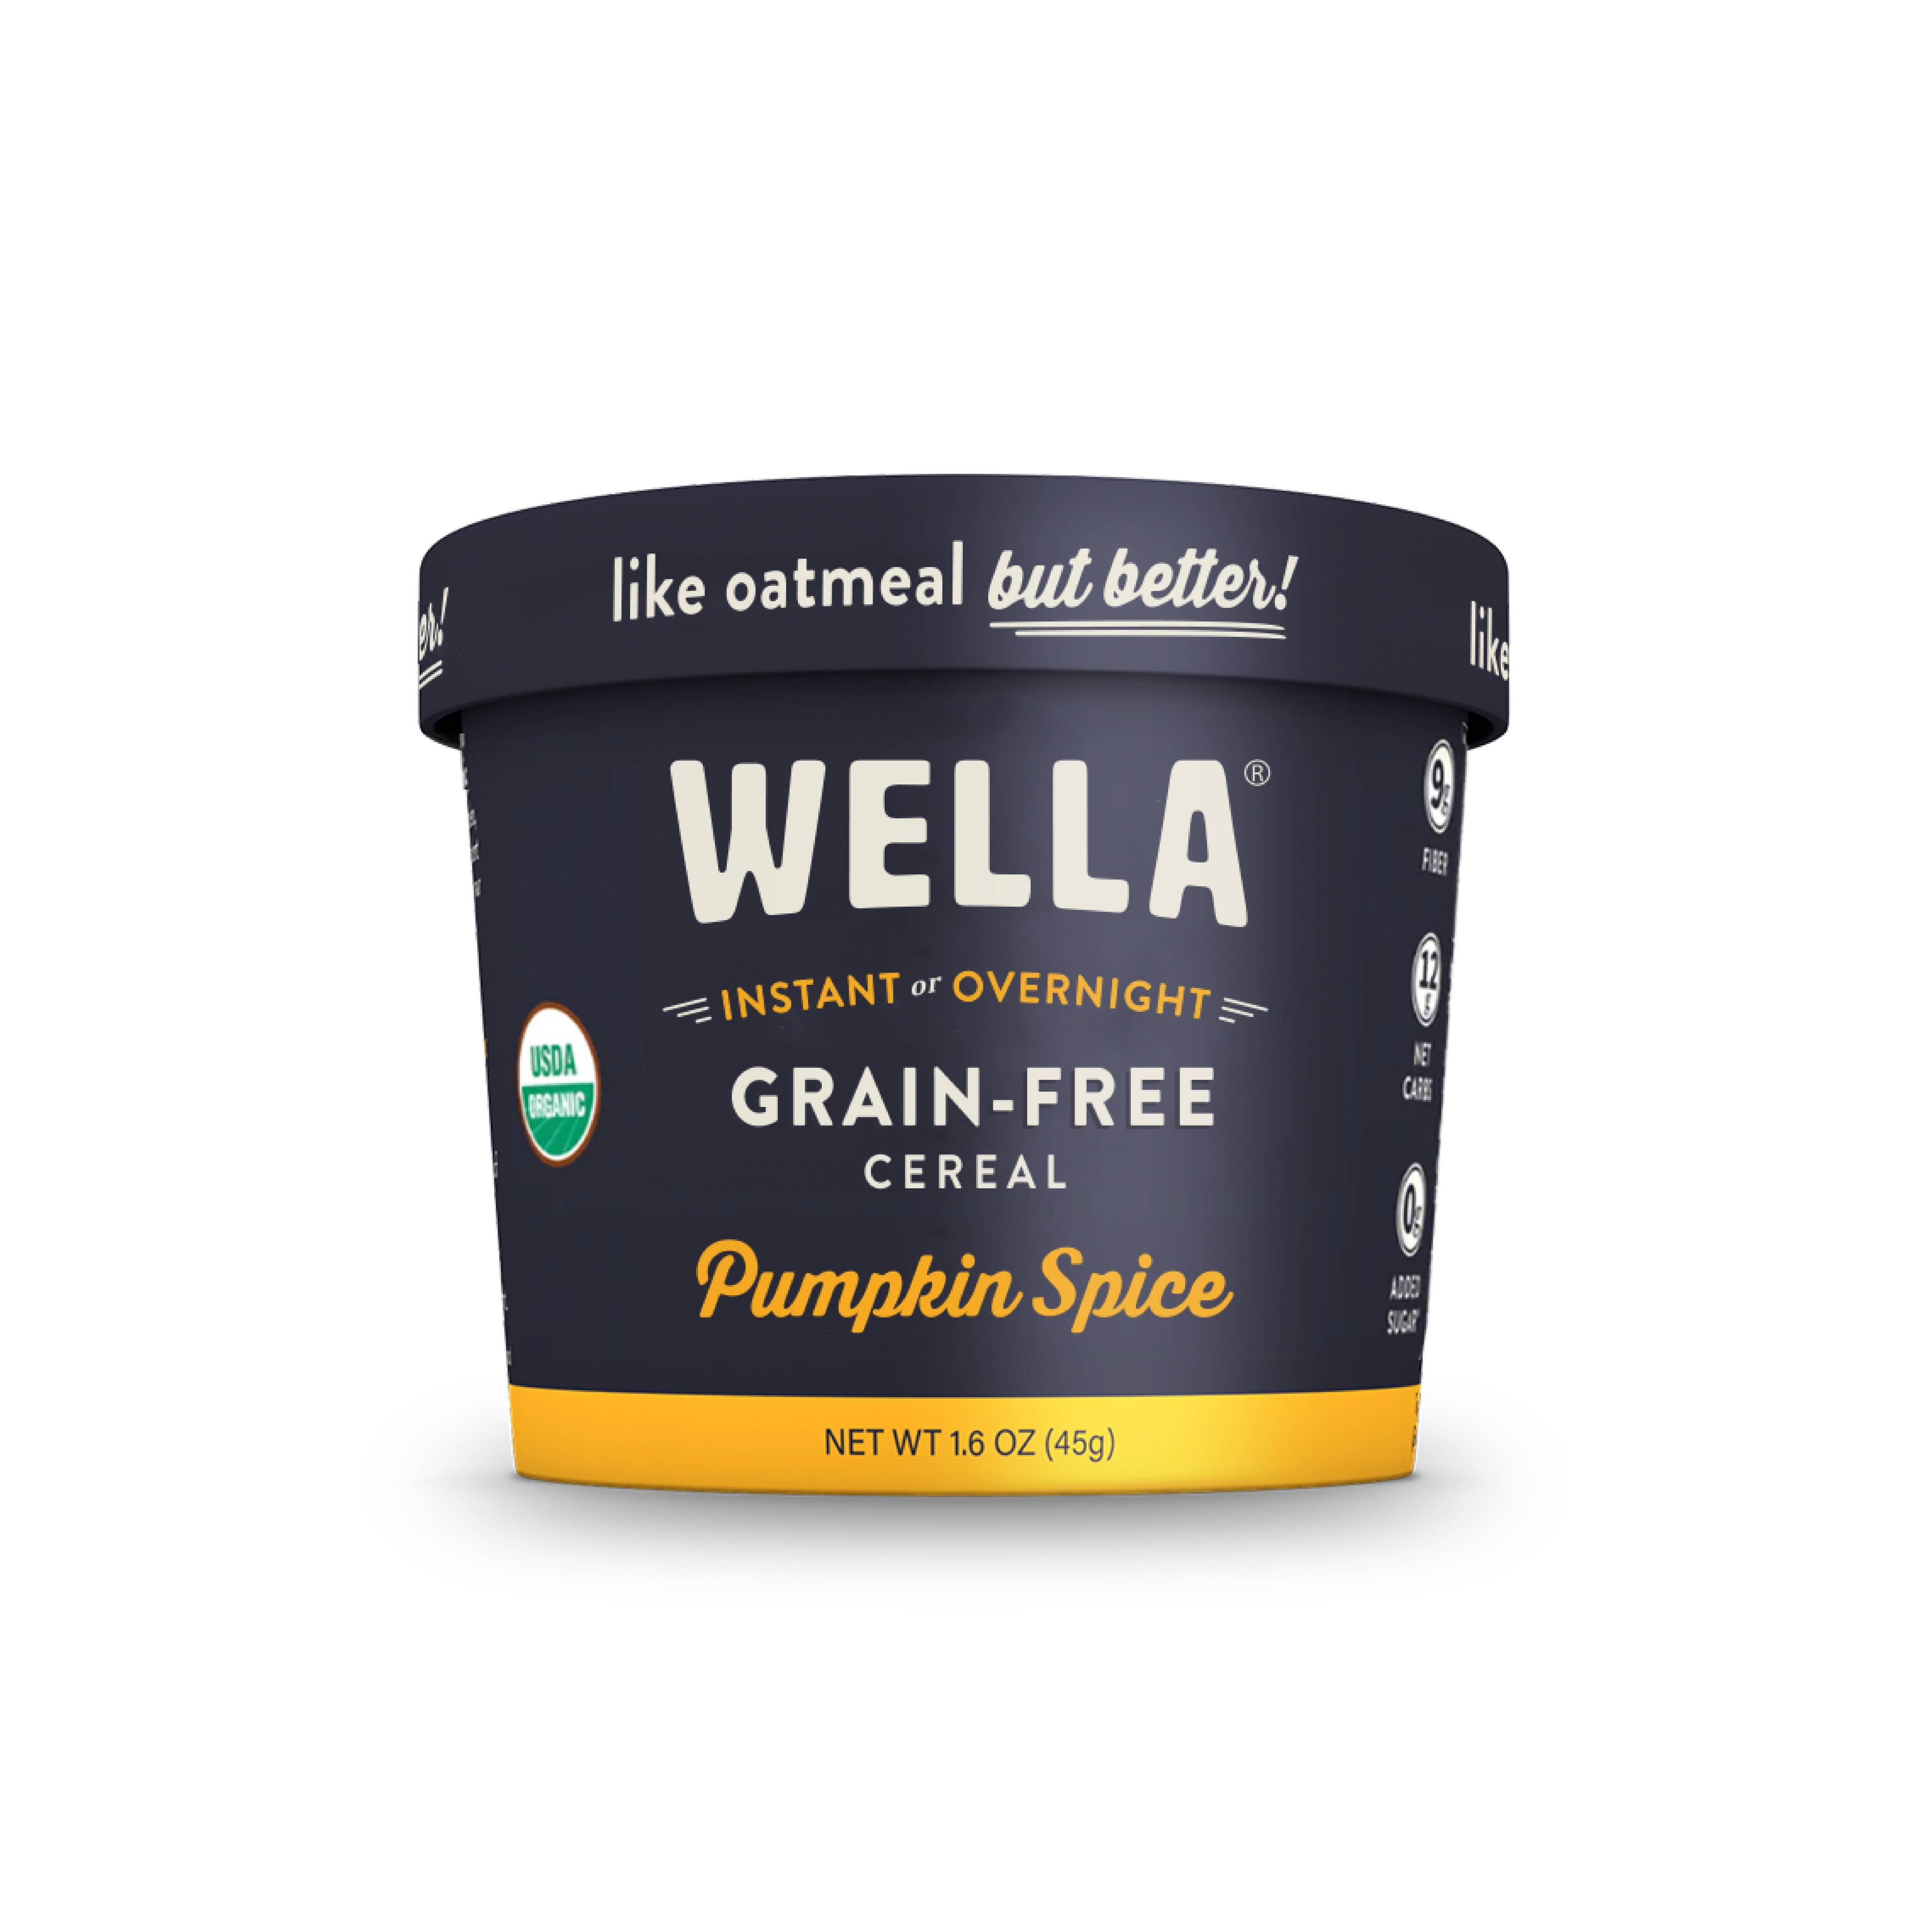 Wella Grain-Free Cereal Pumpkin Spice Cup-1